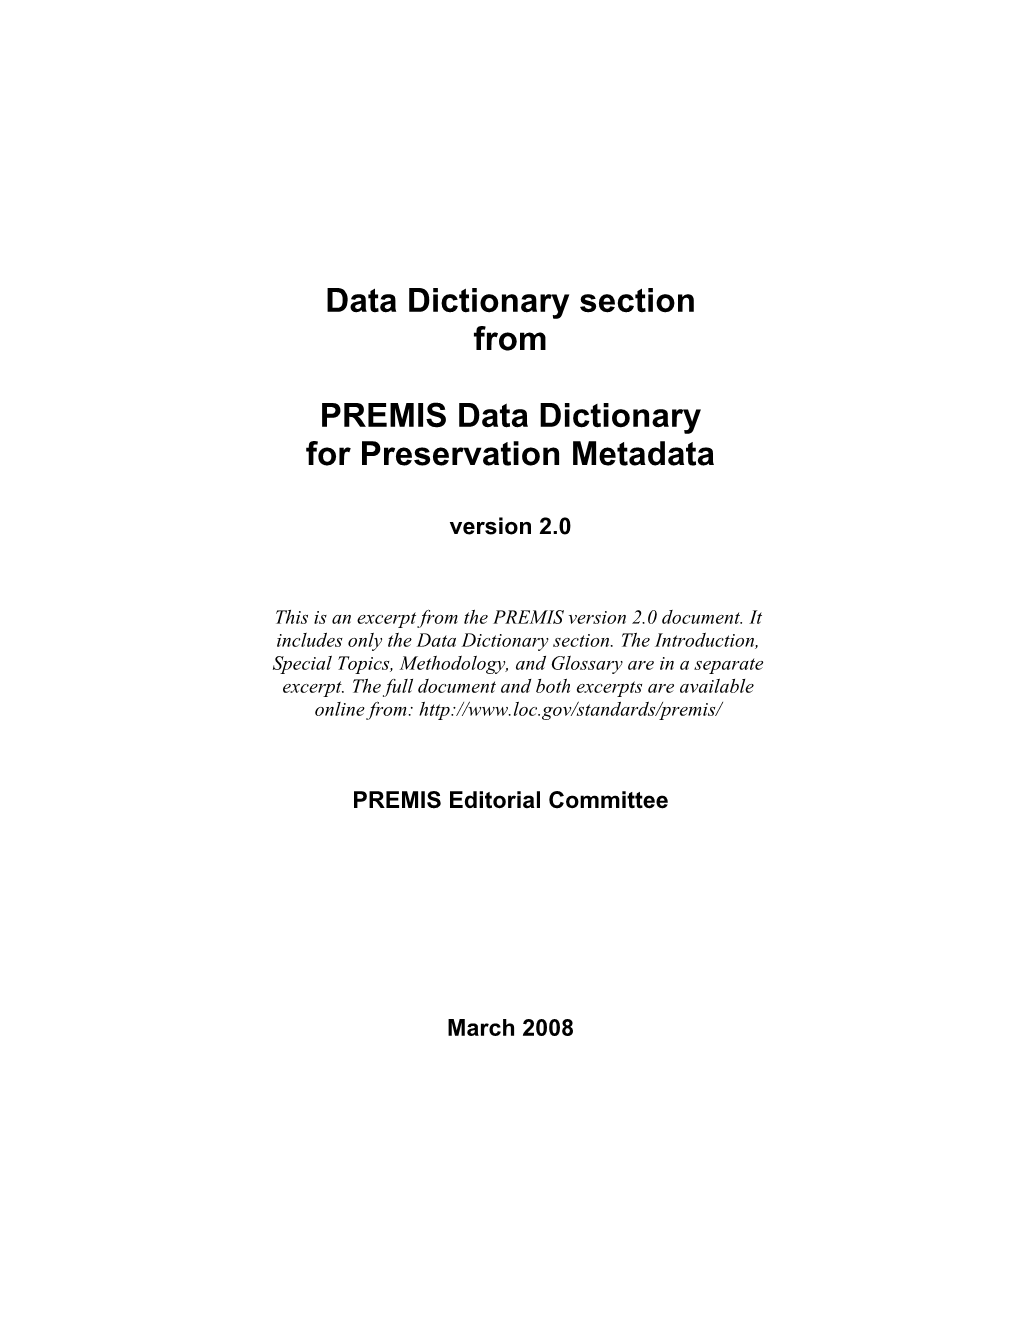 PREMIS Data Dictionary for Preservation Metadata